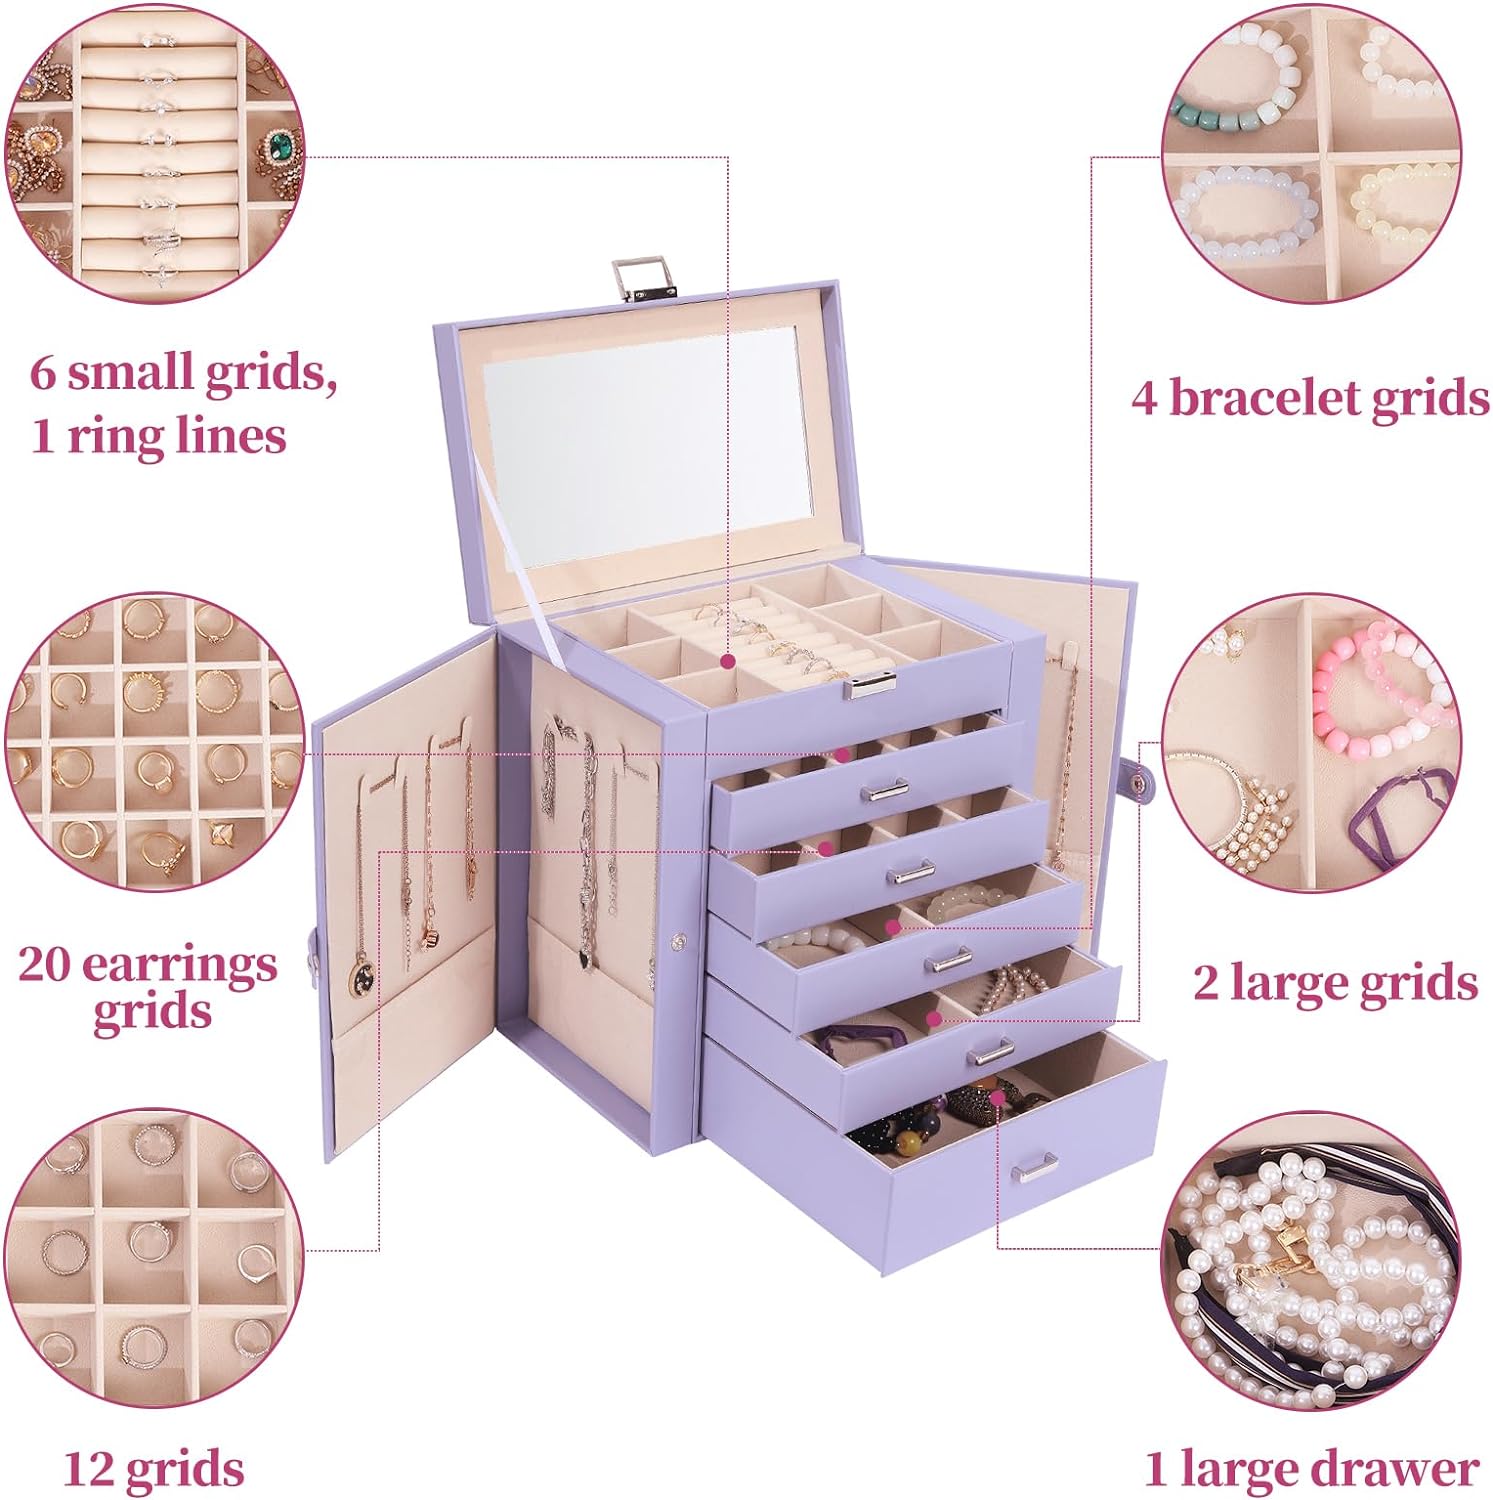 BOOVO Jewelry Box For Women Girl Large 6 Layer Jewelry Organizer Box with Lock Storage Necklace Ring Earrings Bracelet Jewelry Box Women Wood Grain PU Leather Jewelry Box (Wood grain/red)